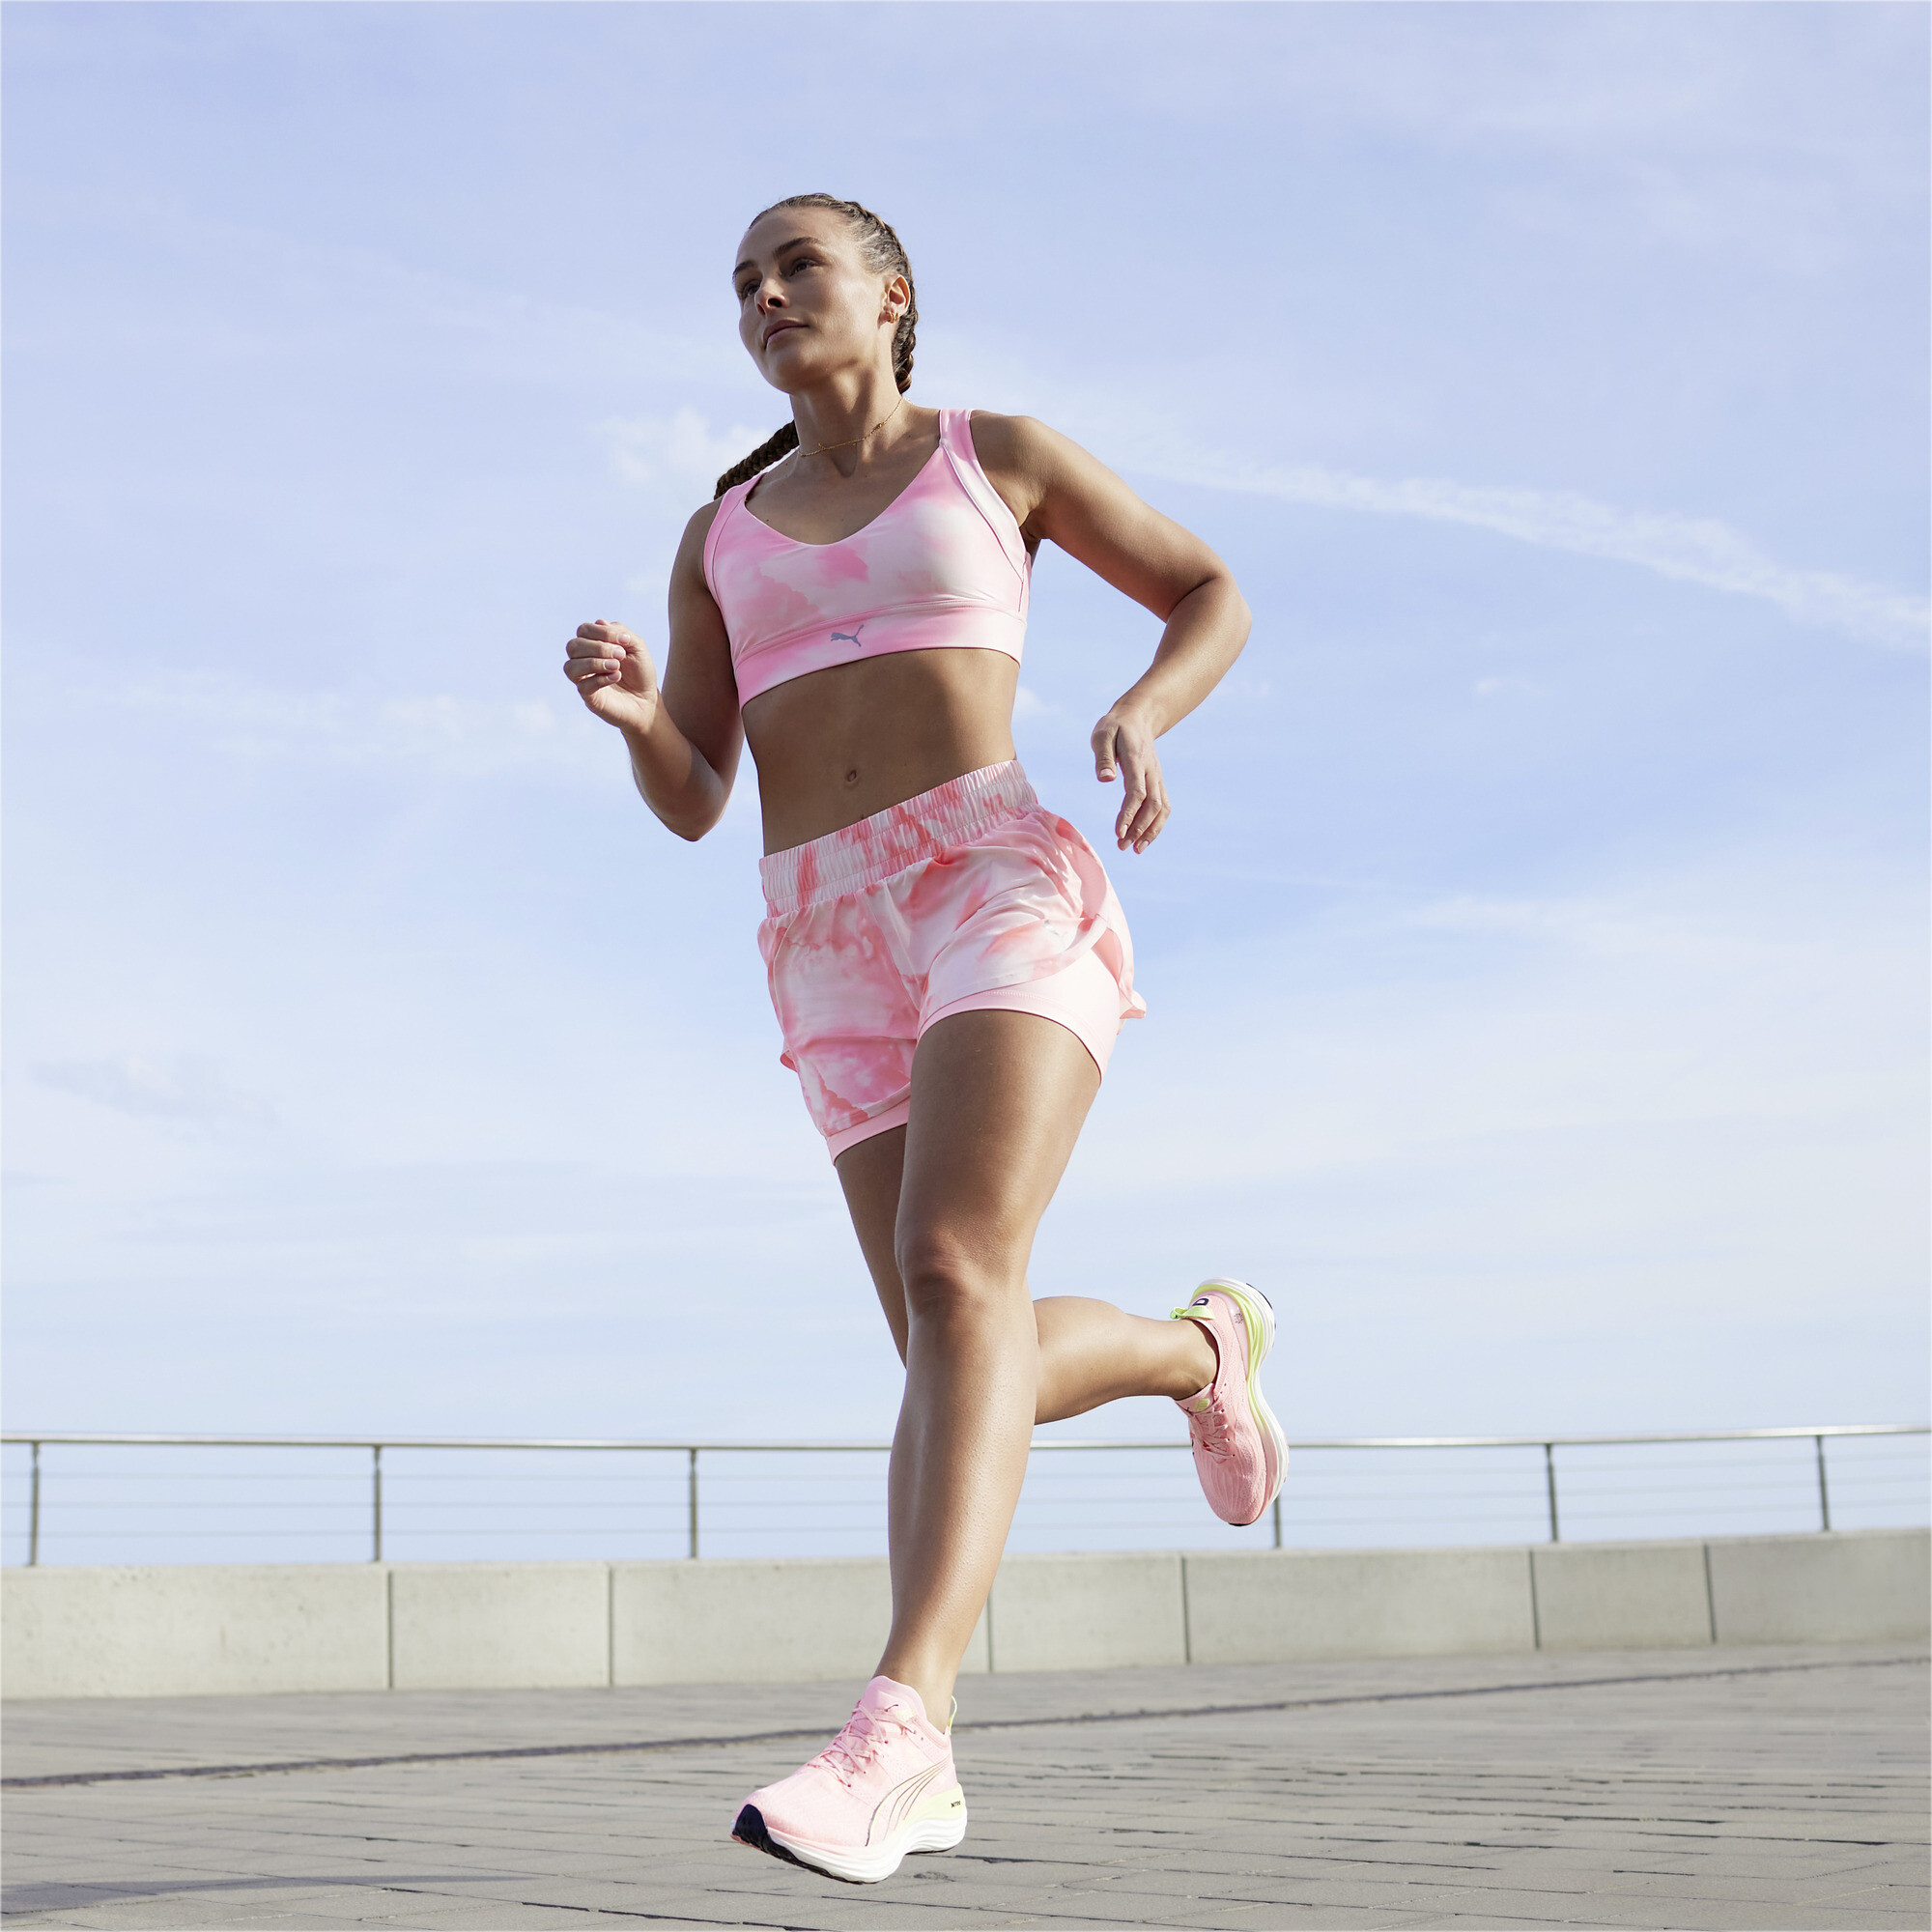 Women's PUMA Ultraweave 2-in-1 Running Shorts Women In Pink, Size Large